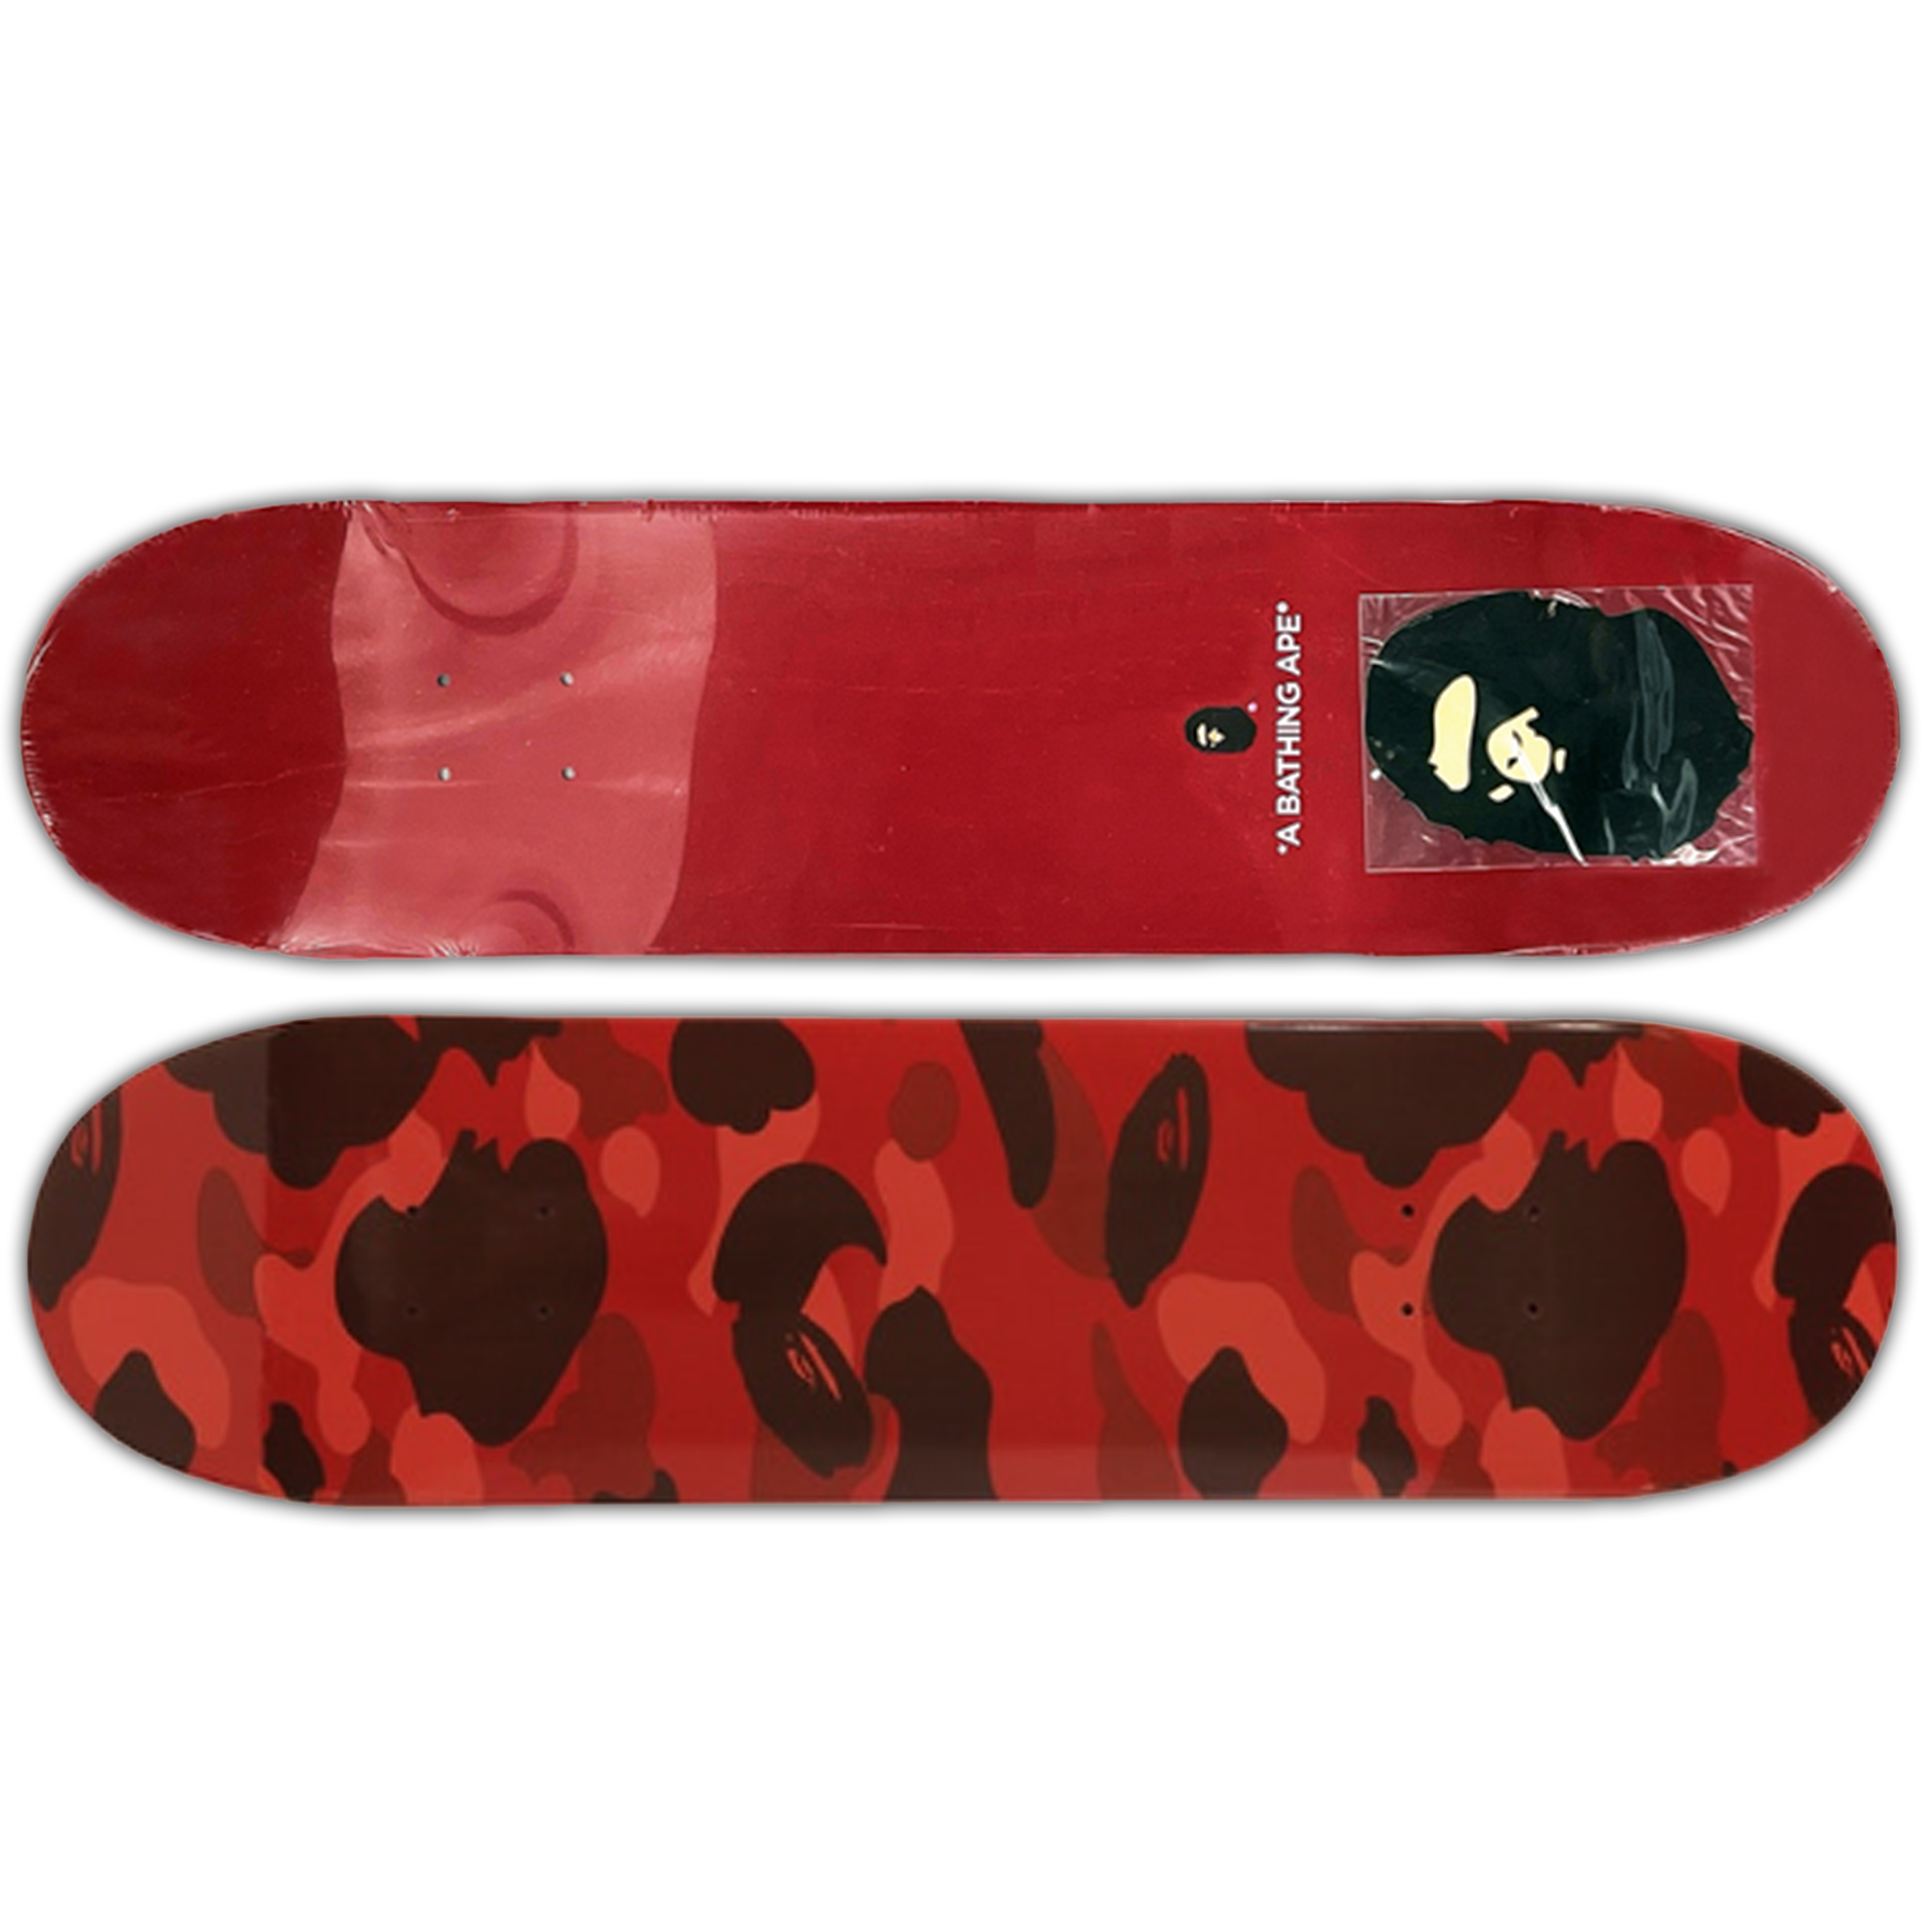 A Bathing Ape "Color Camo" Skateboard